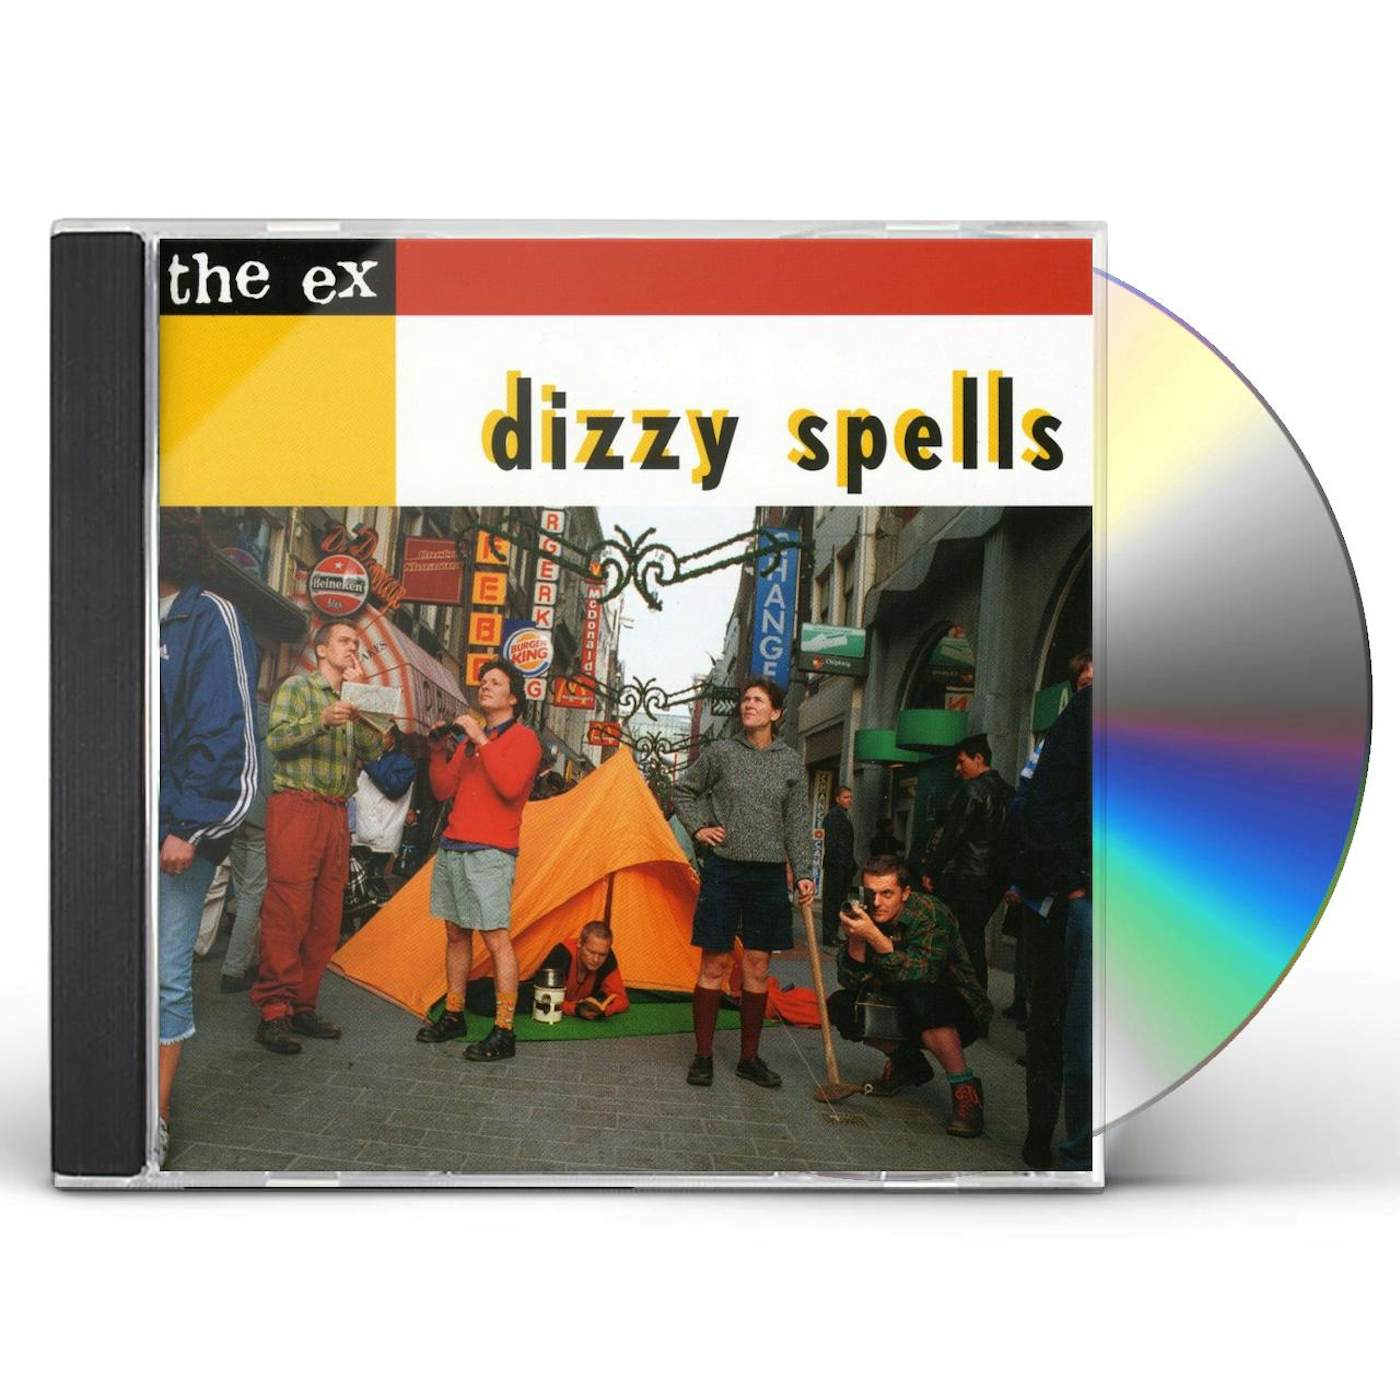 Ex DIZZY SPELLS CD